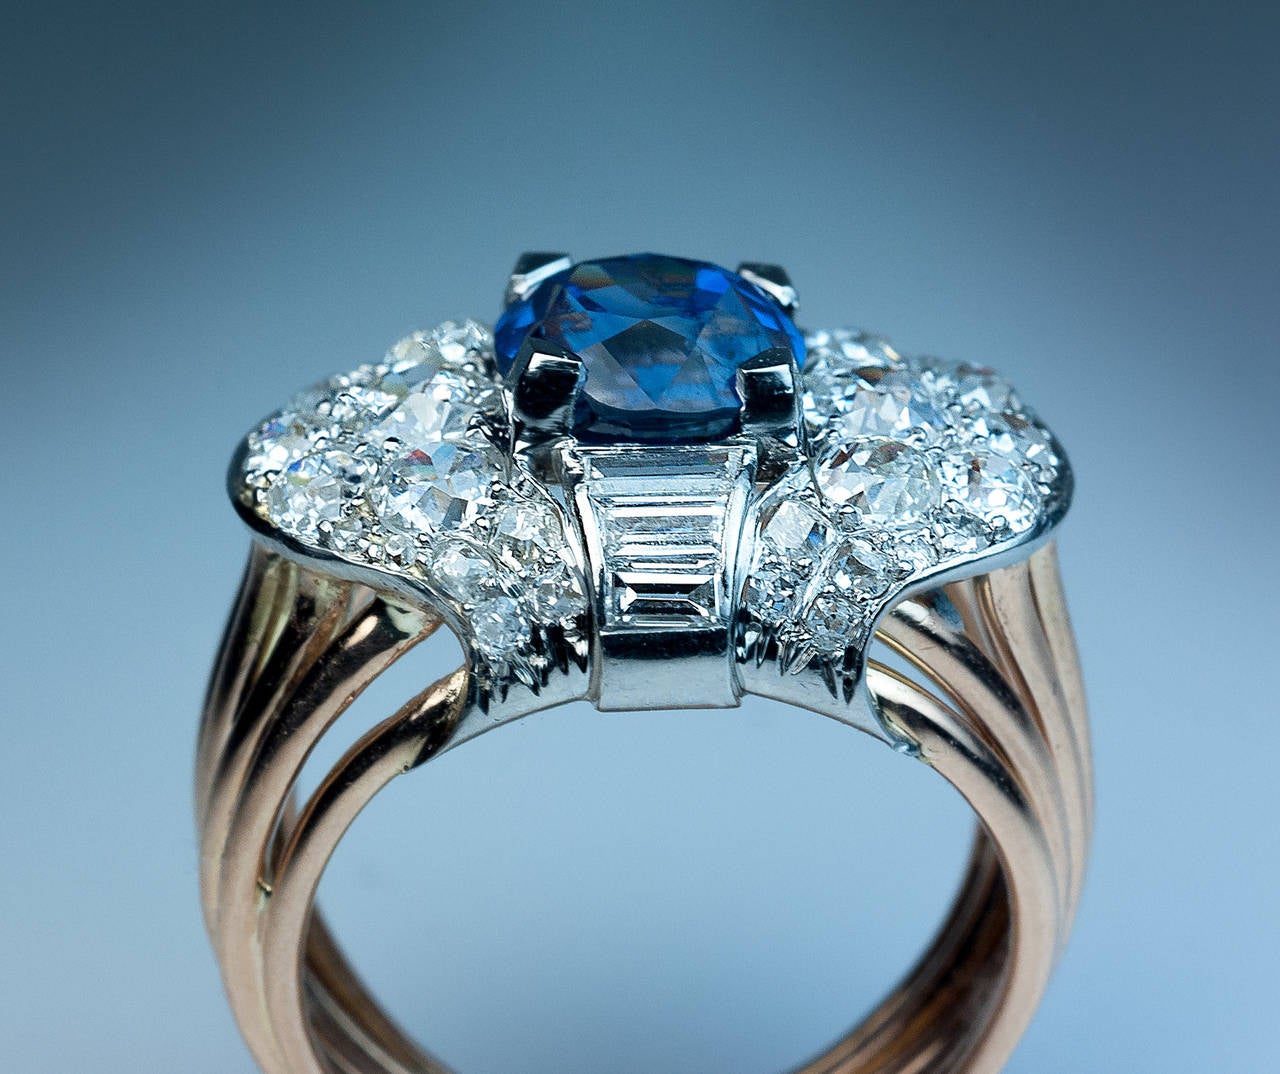 5ct sapphire ring